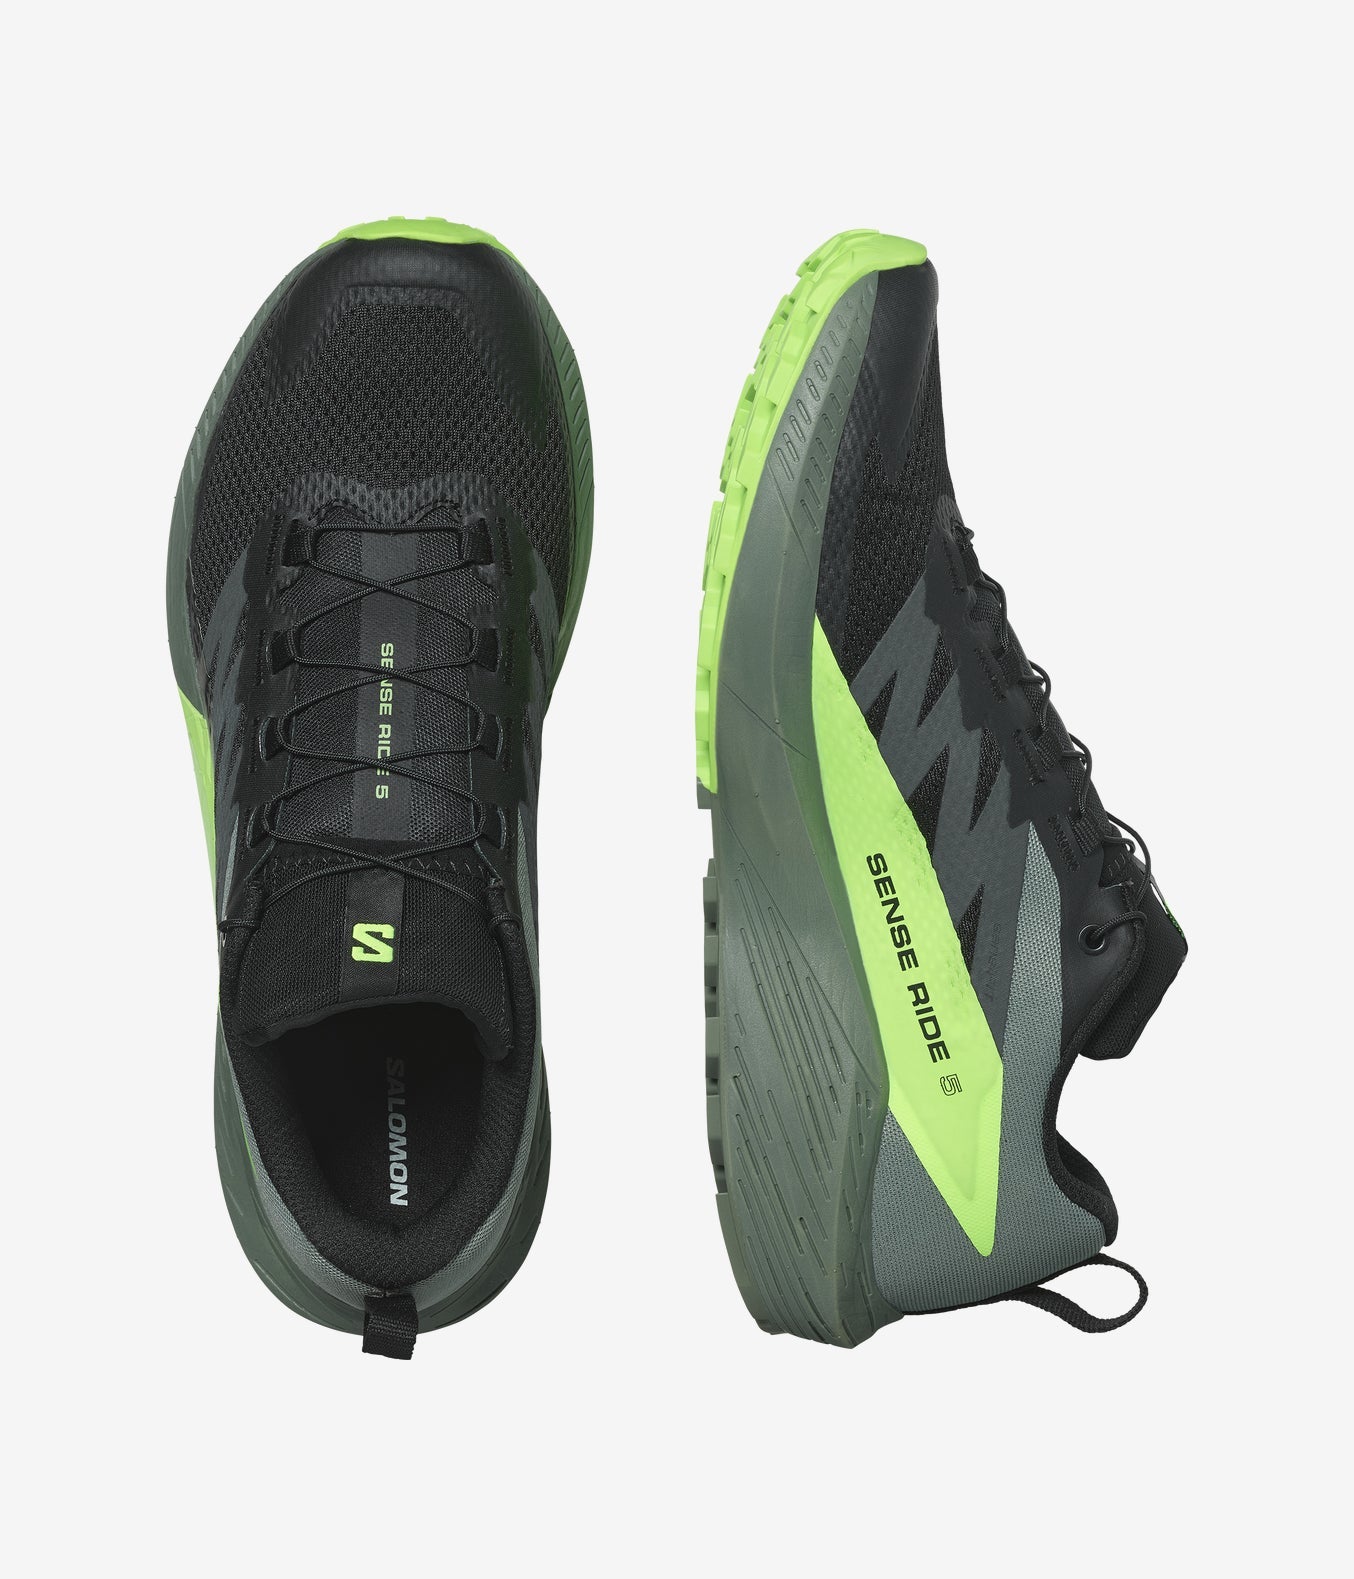 Salomon Men's SENSE RIDE 5 Trail Running Shoes - Energy Save Midsole, All Terrain Grip